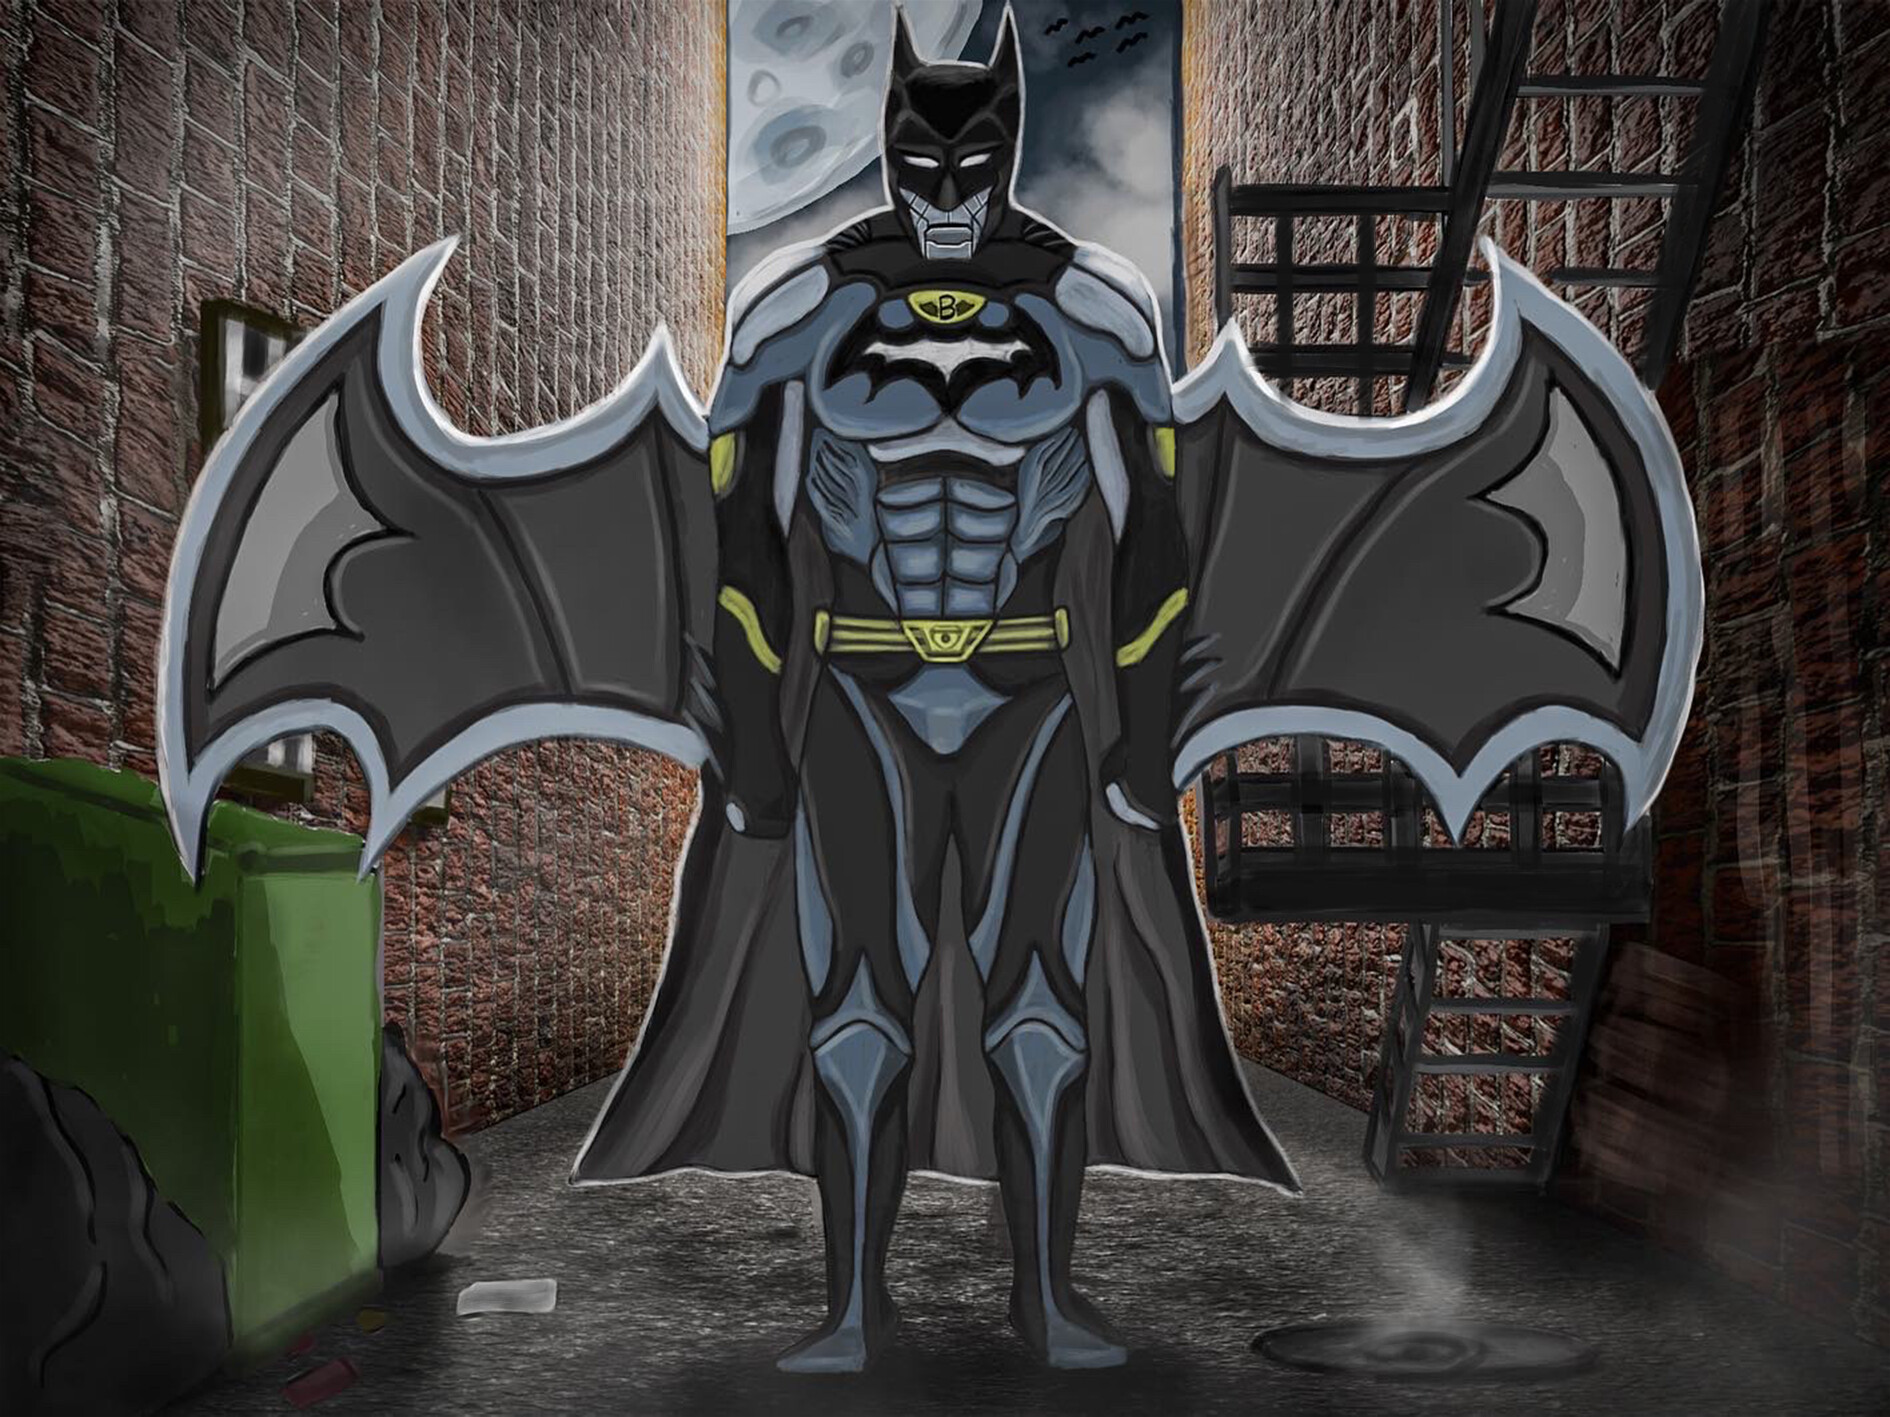 Batman concept art - Finished Projects - Blender Artists Community